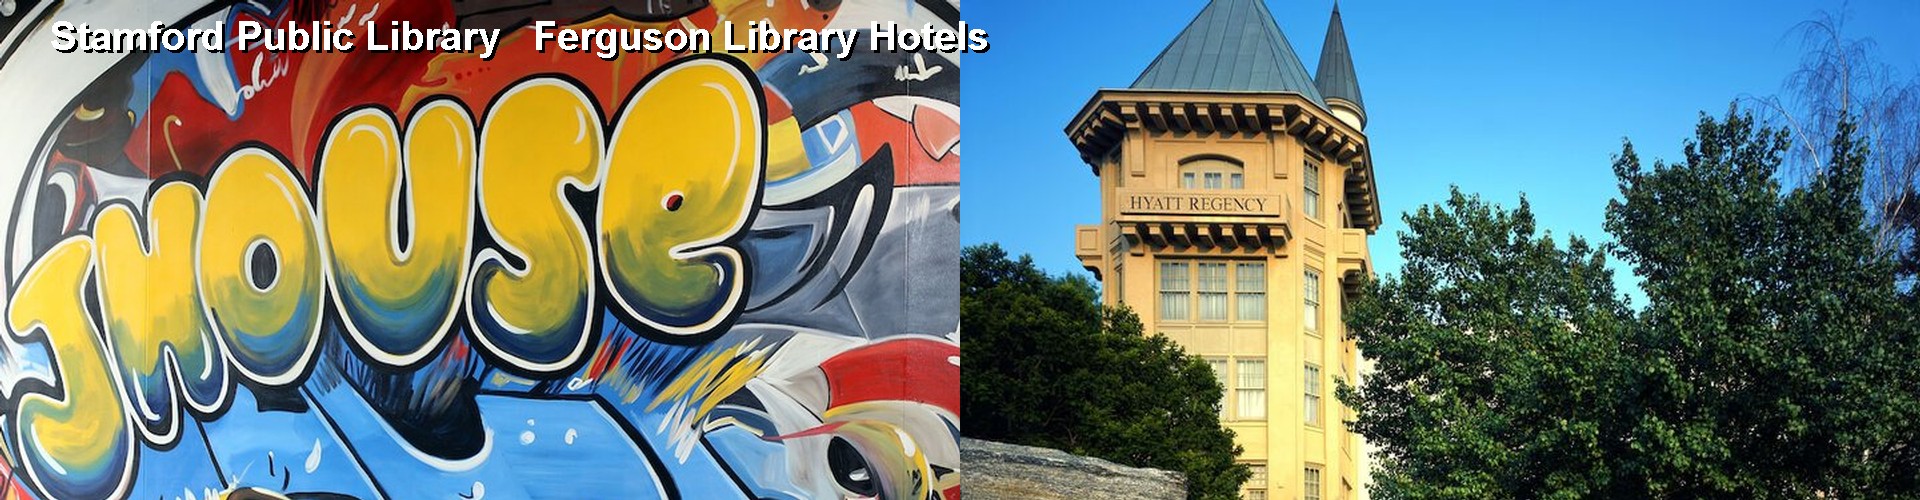 3 Best Hotels near Stamford Public Library   Ferguson Library